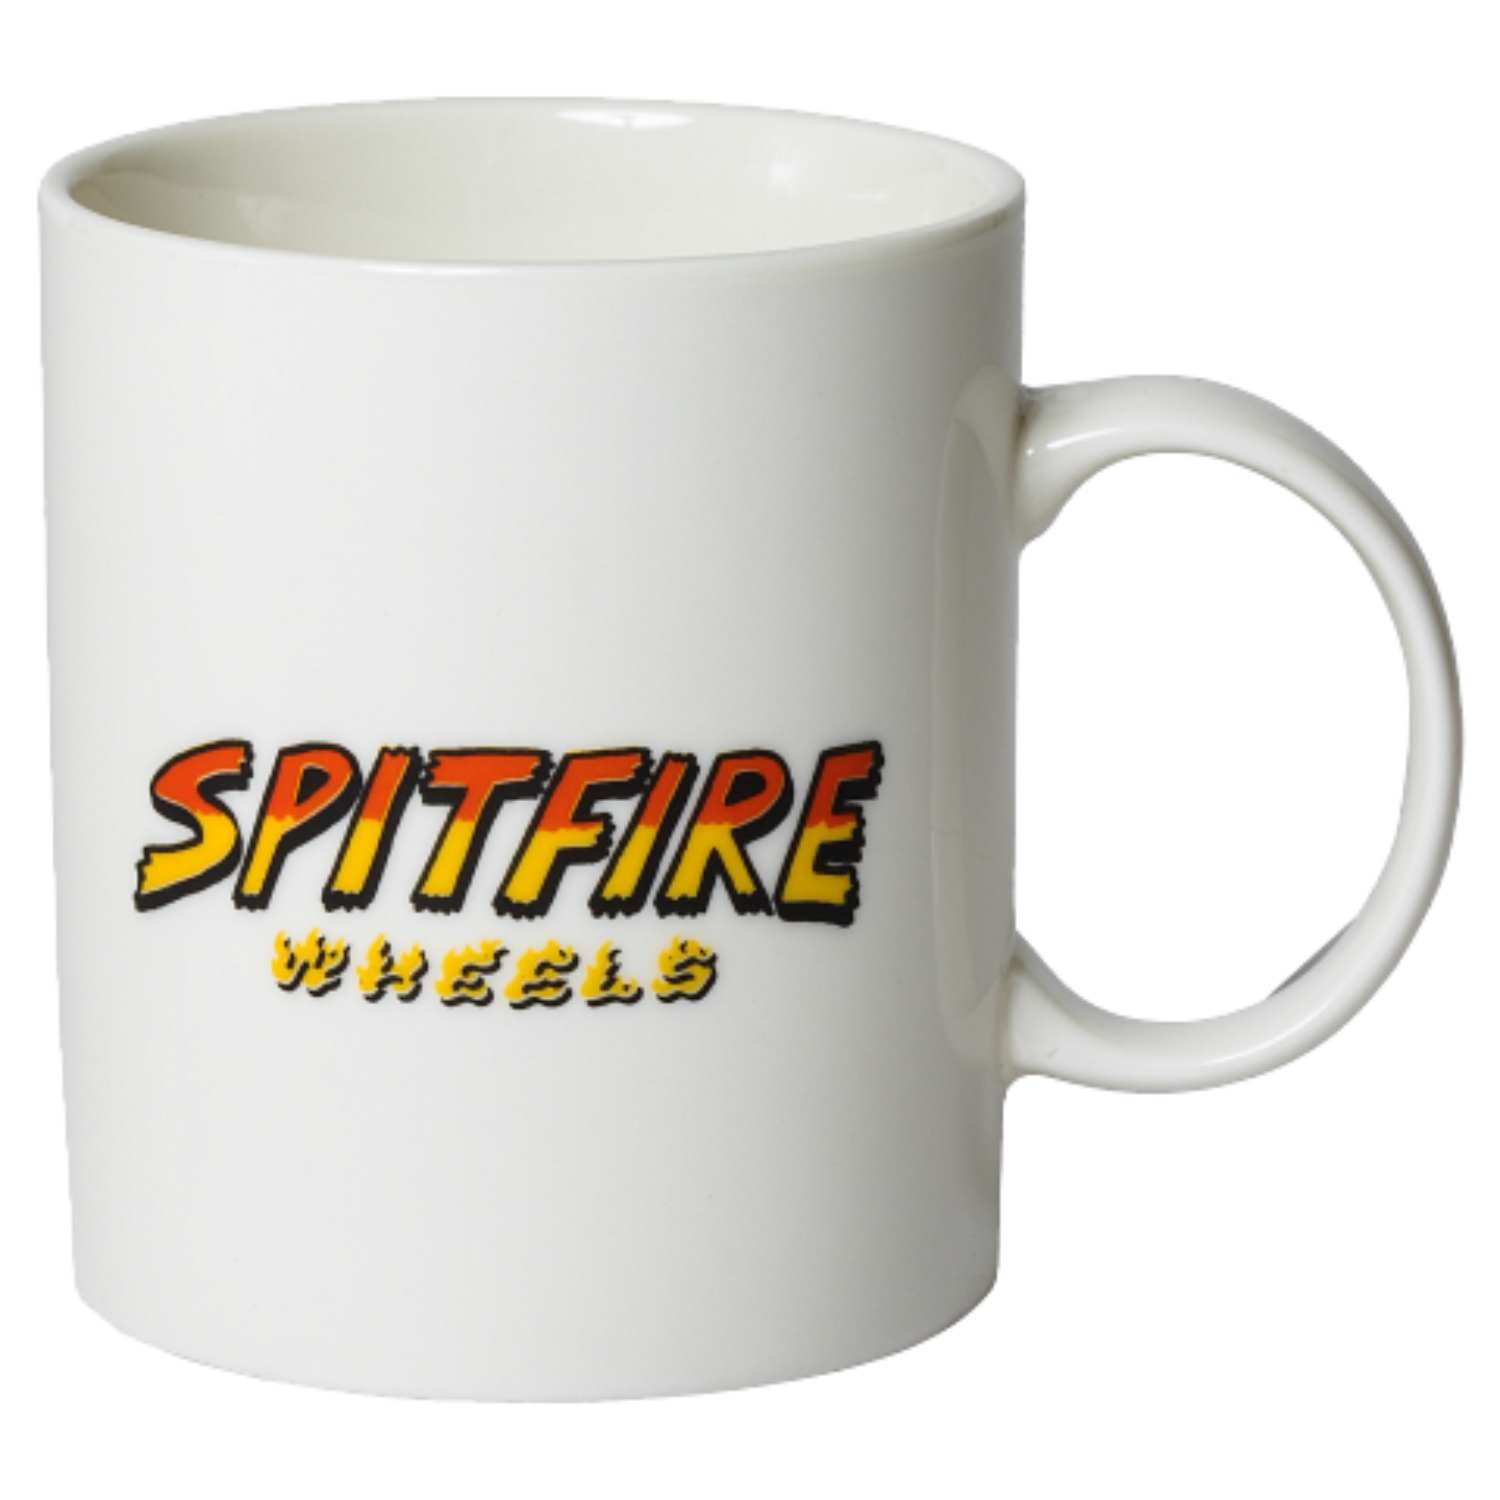 Spitfire Mug - Hellhounds - White